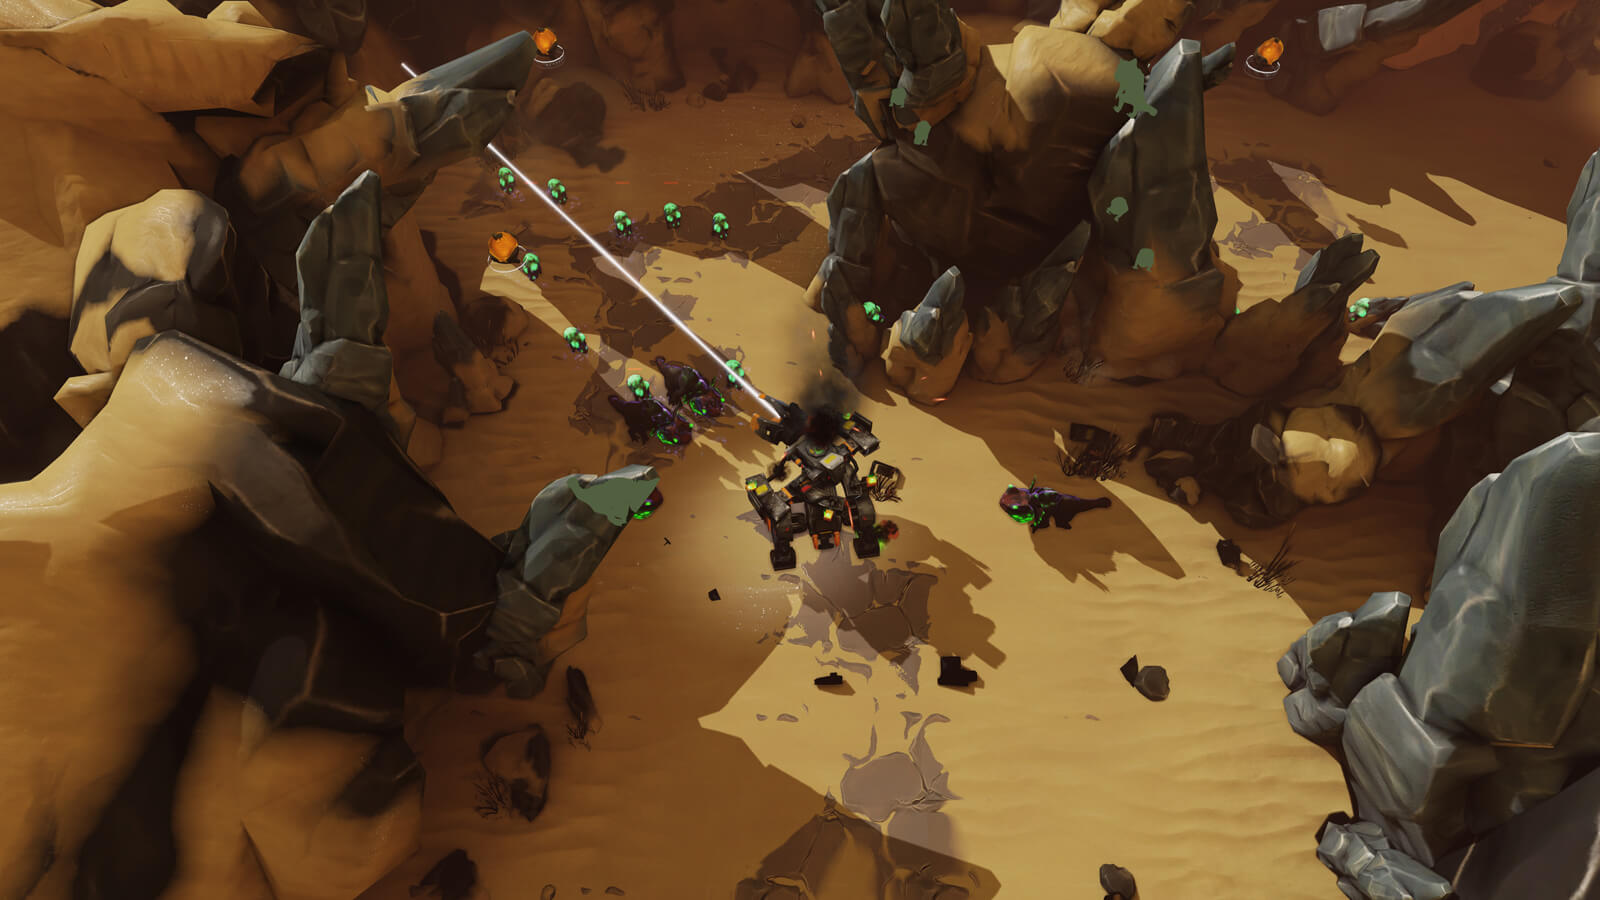 A battle mech shoots a laser at the enemies surrounding it in a desert canyon